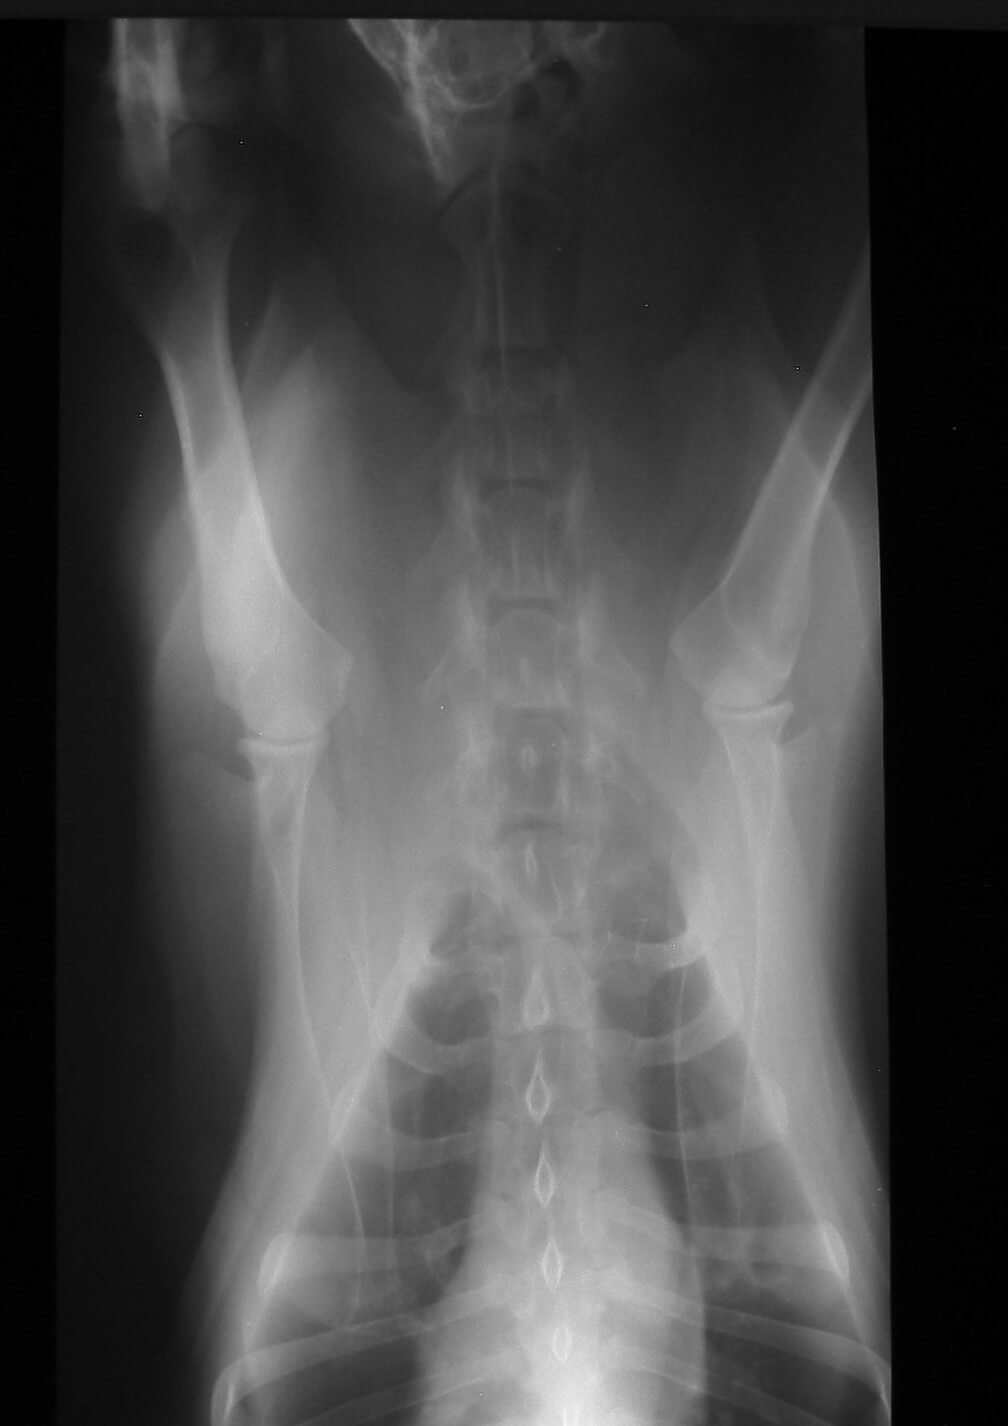 Veterinary Services - X-ray Imaging - Markham, Ontario, Canada